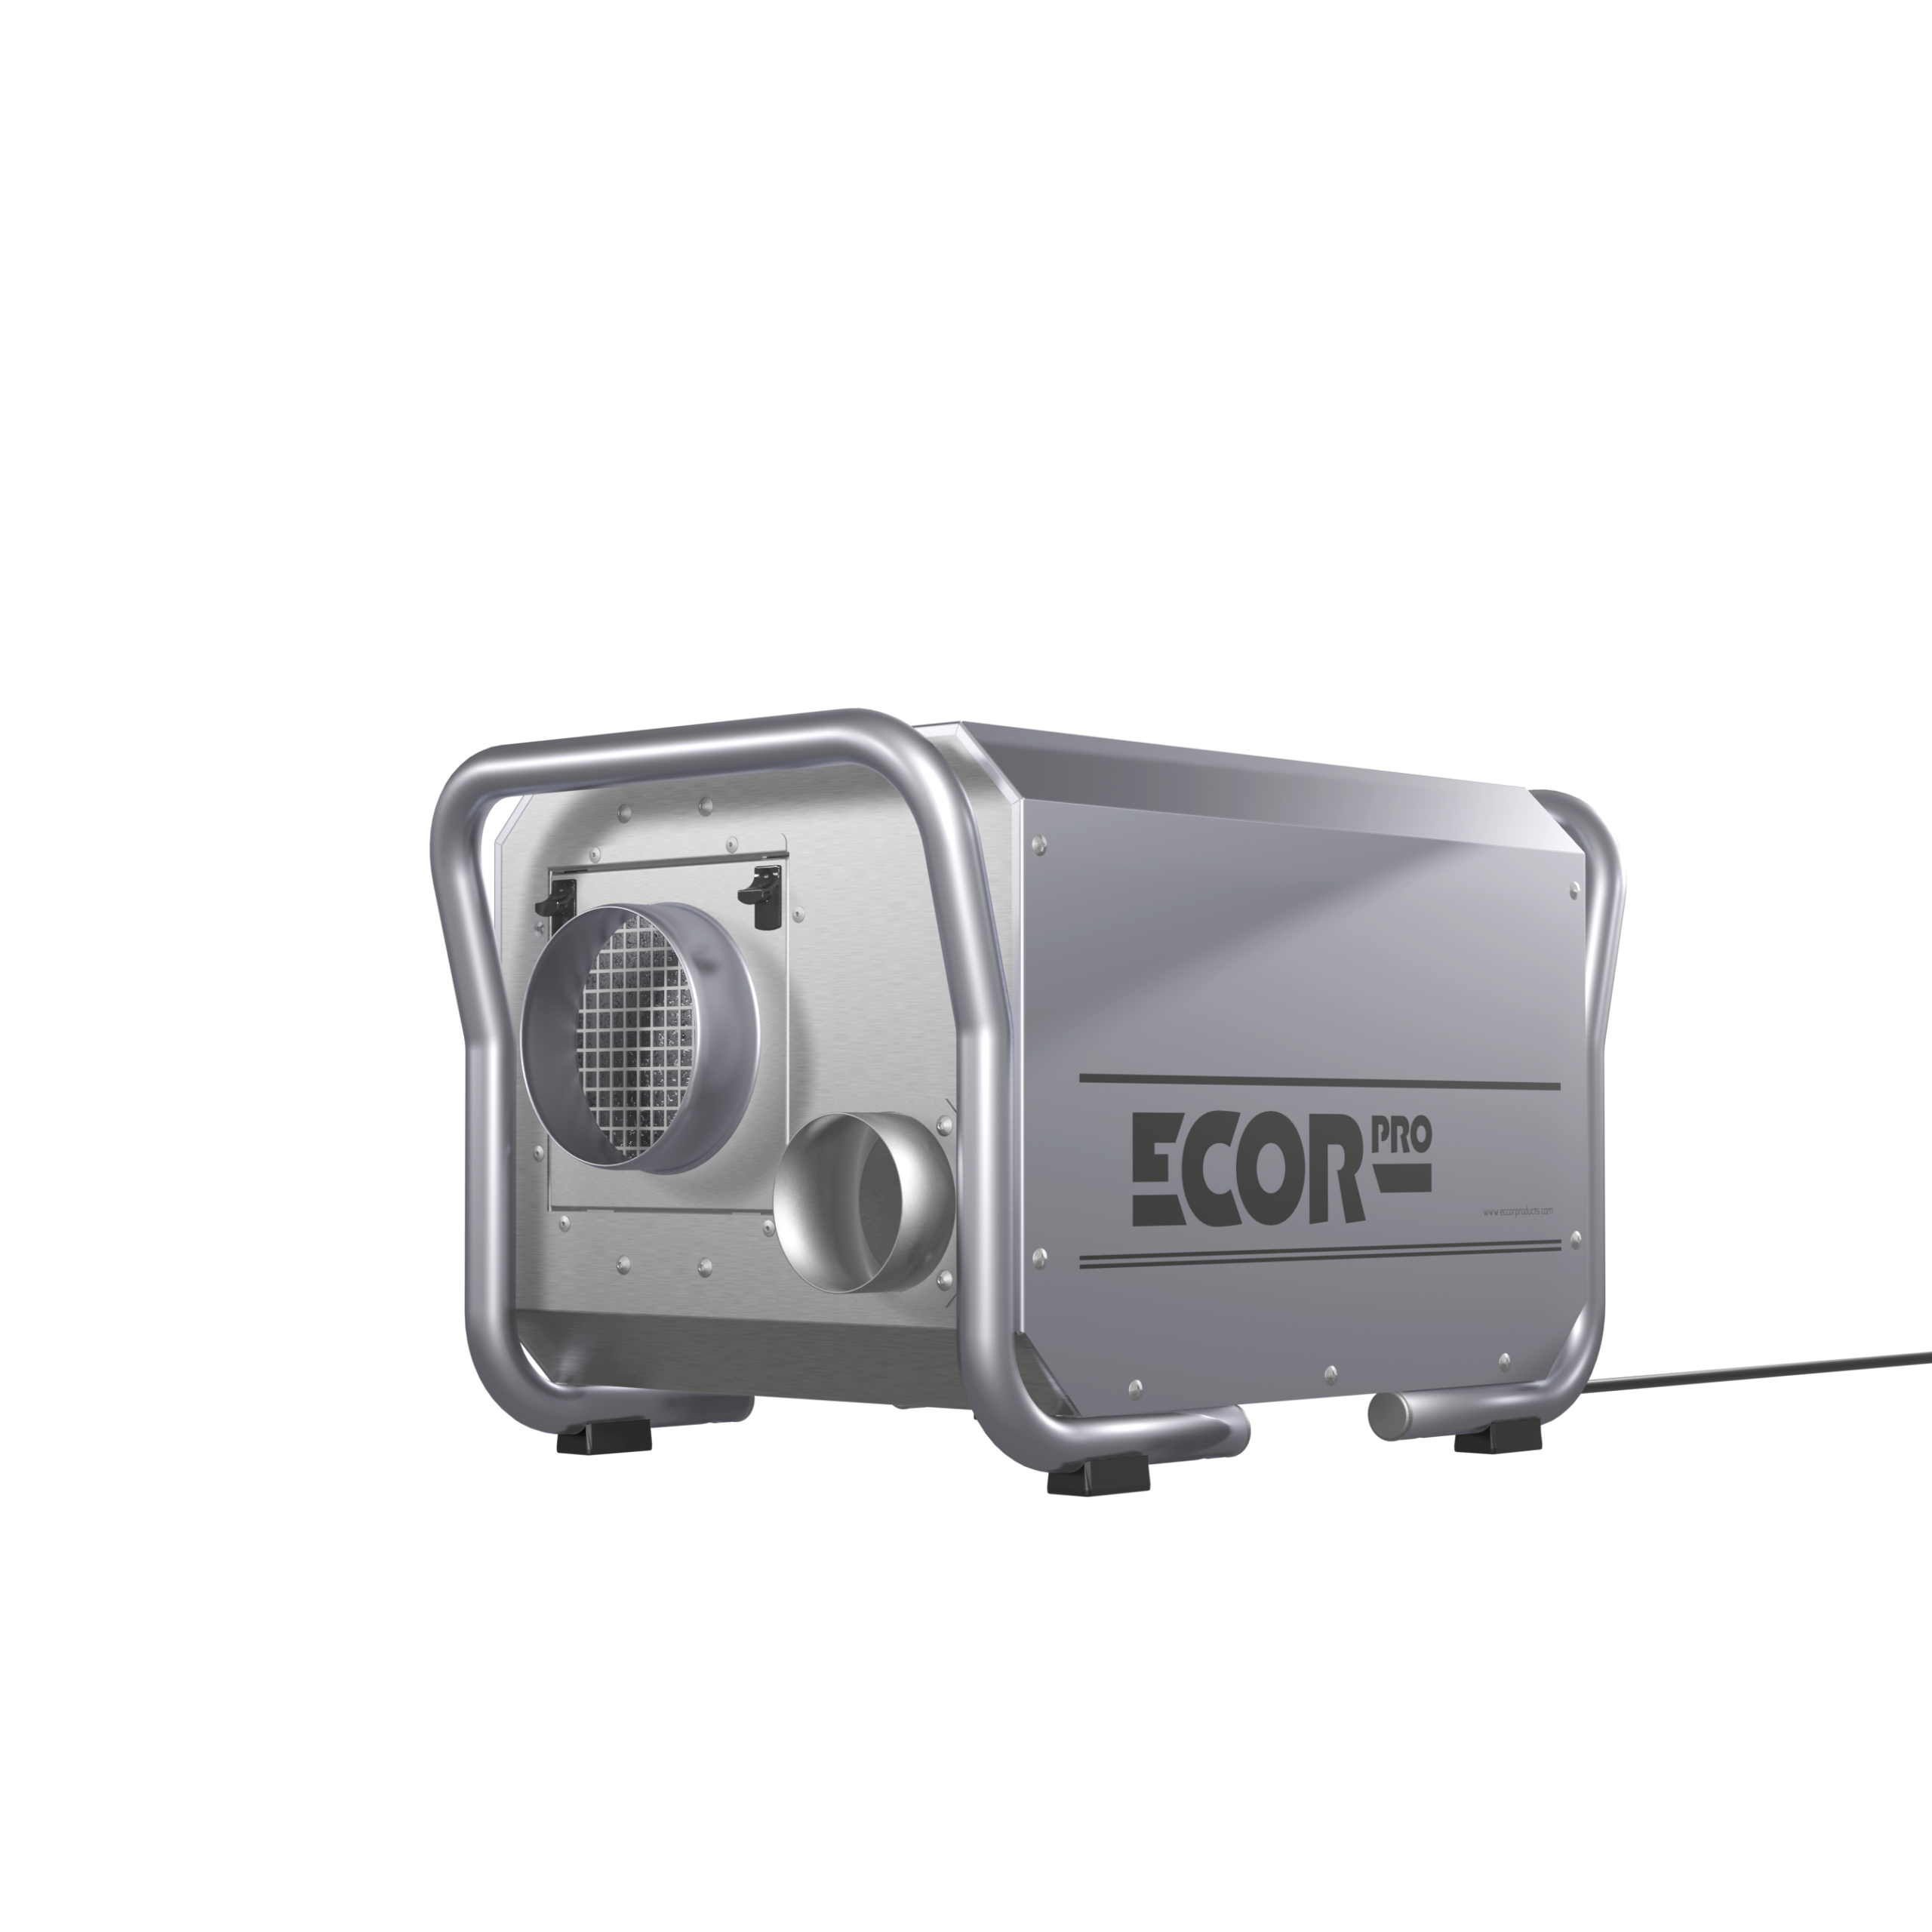 dh3500 inox epd200 pro dehumidifiers by Ecor Pro